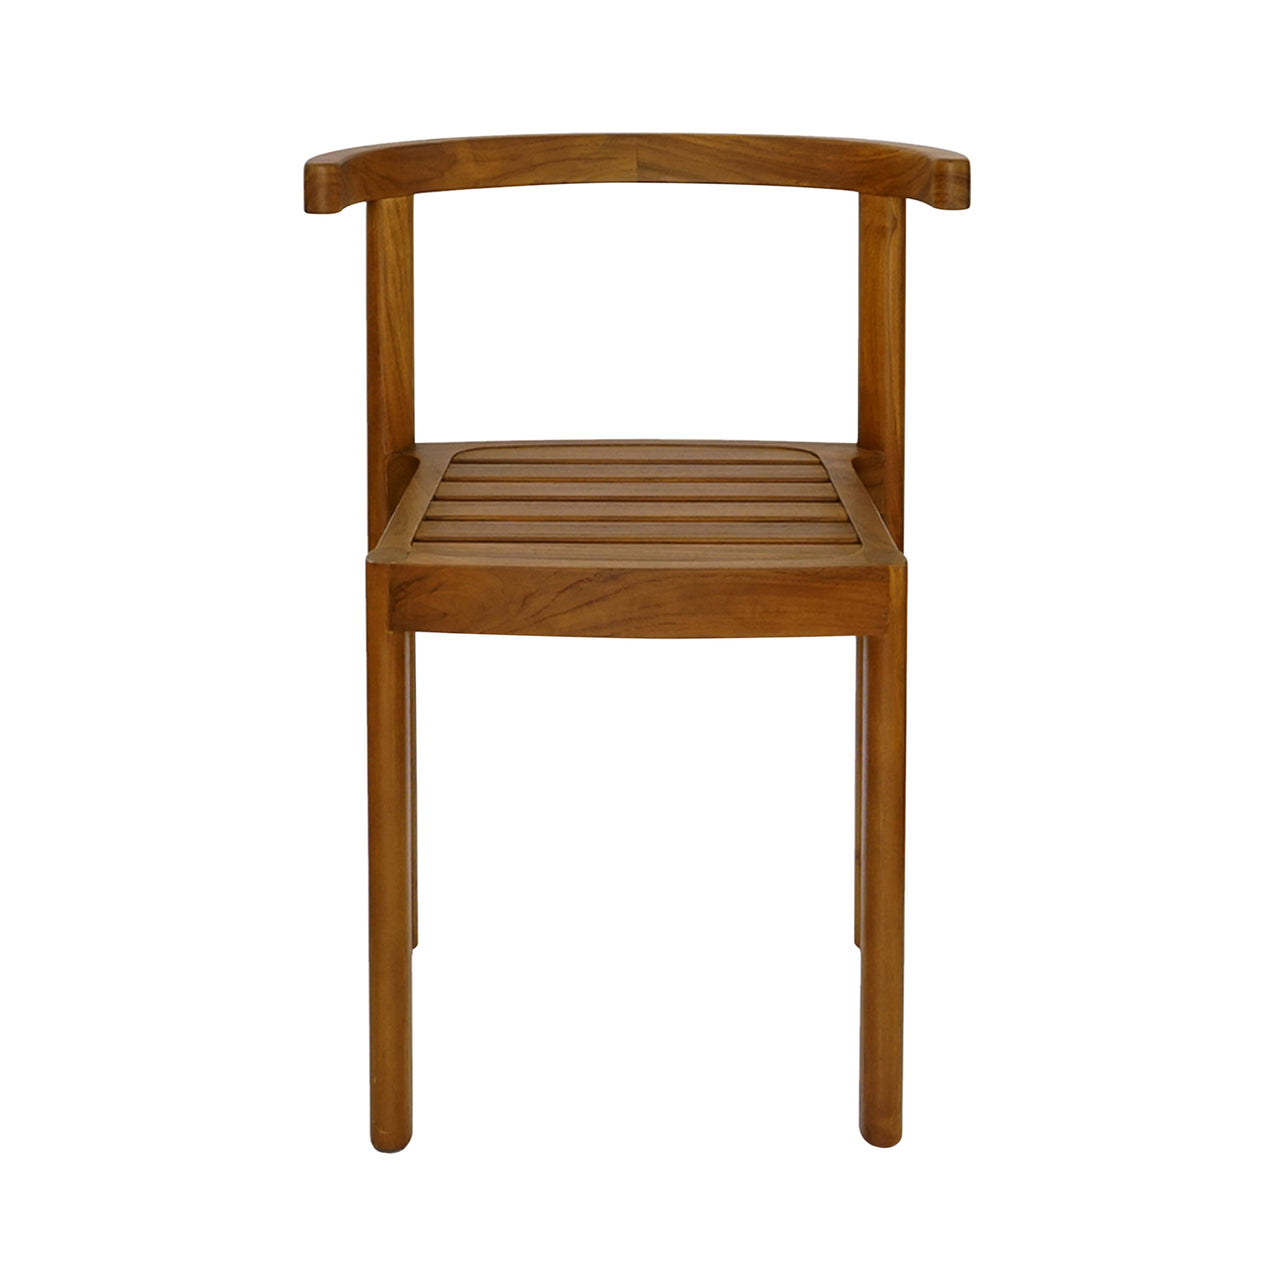 TW Chair: Outdoor